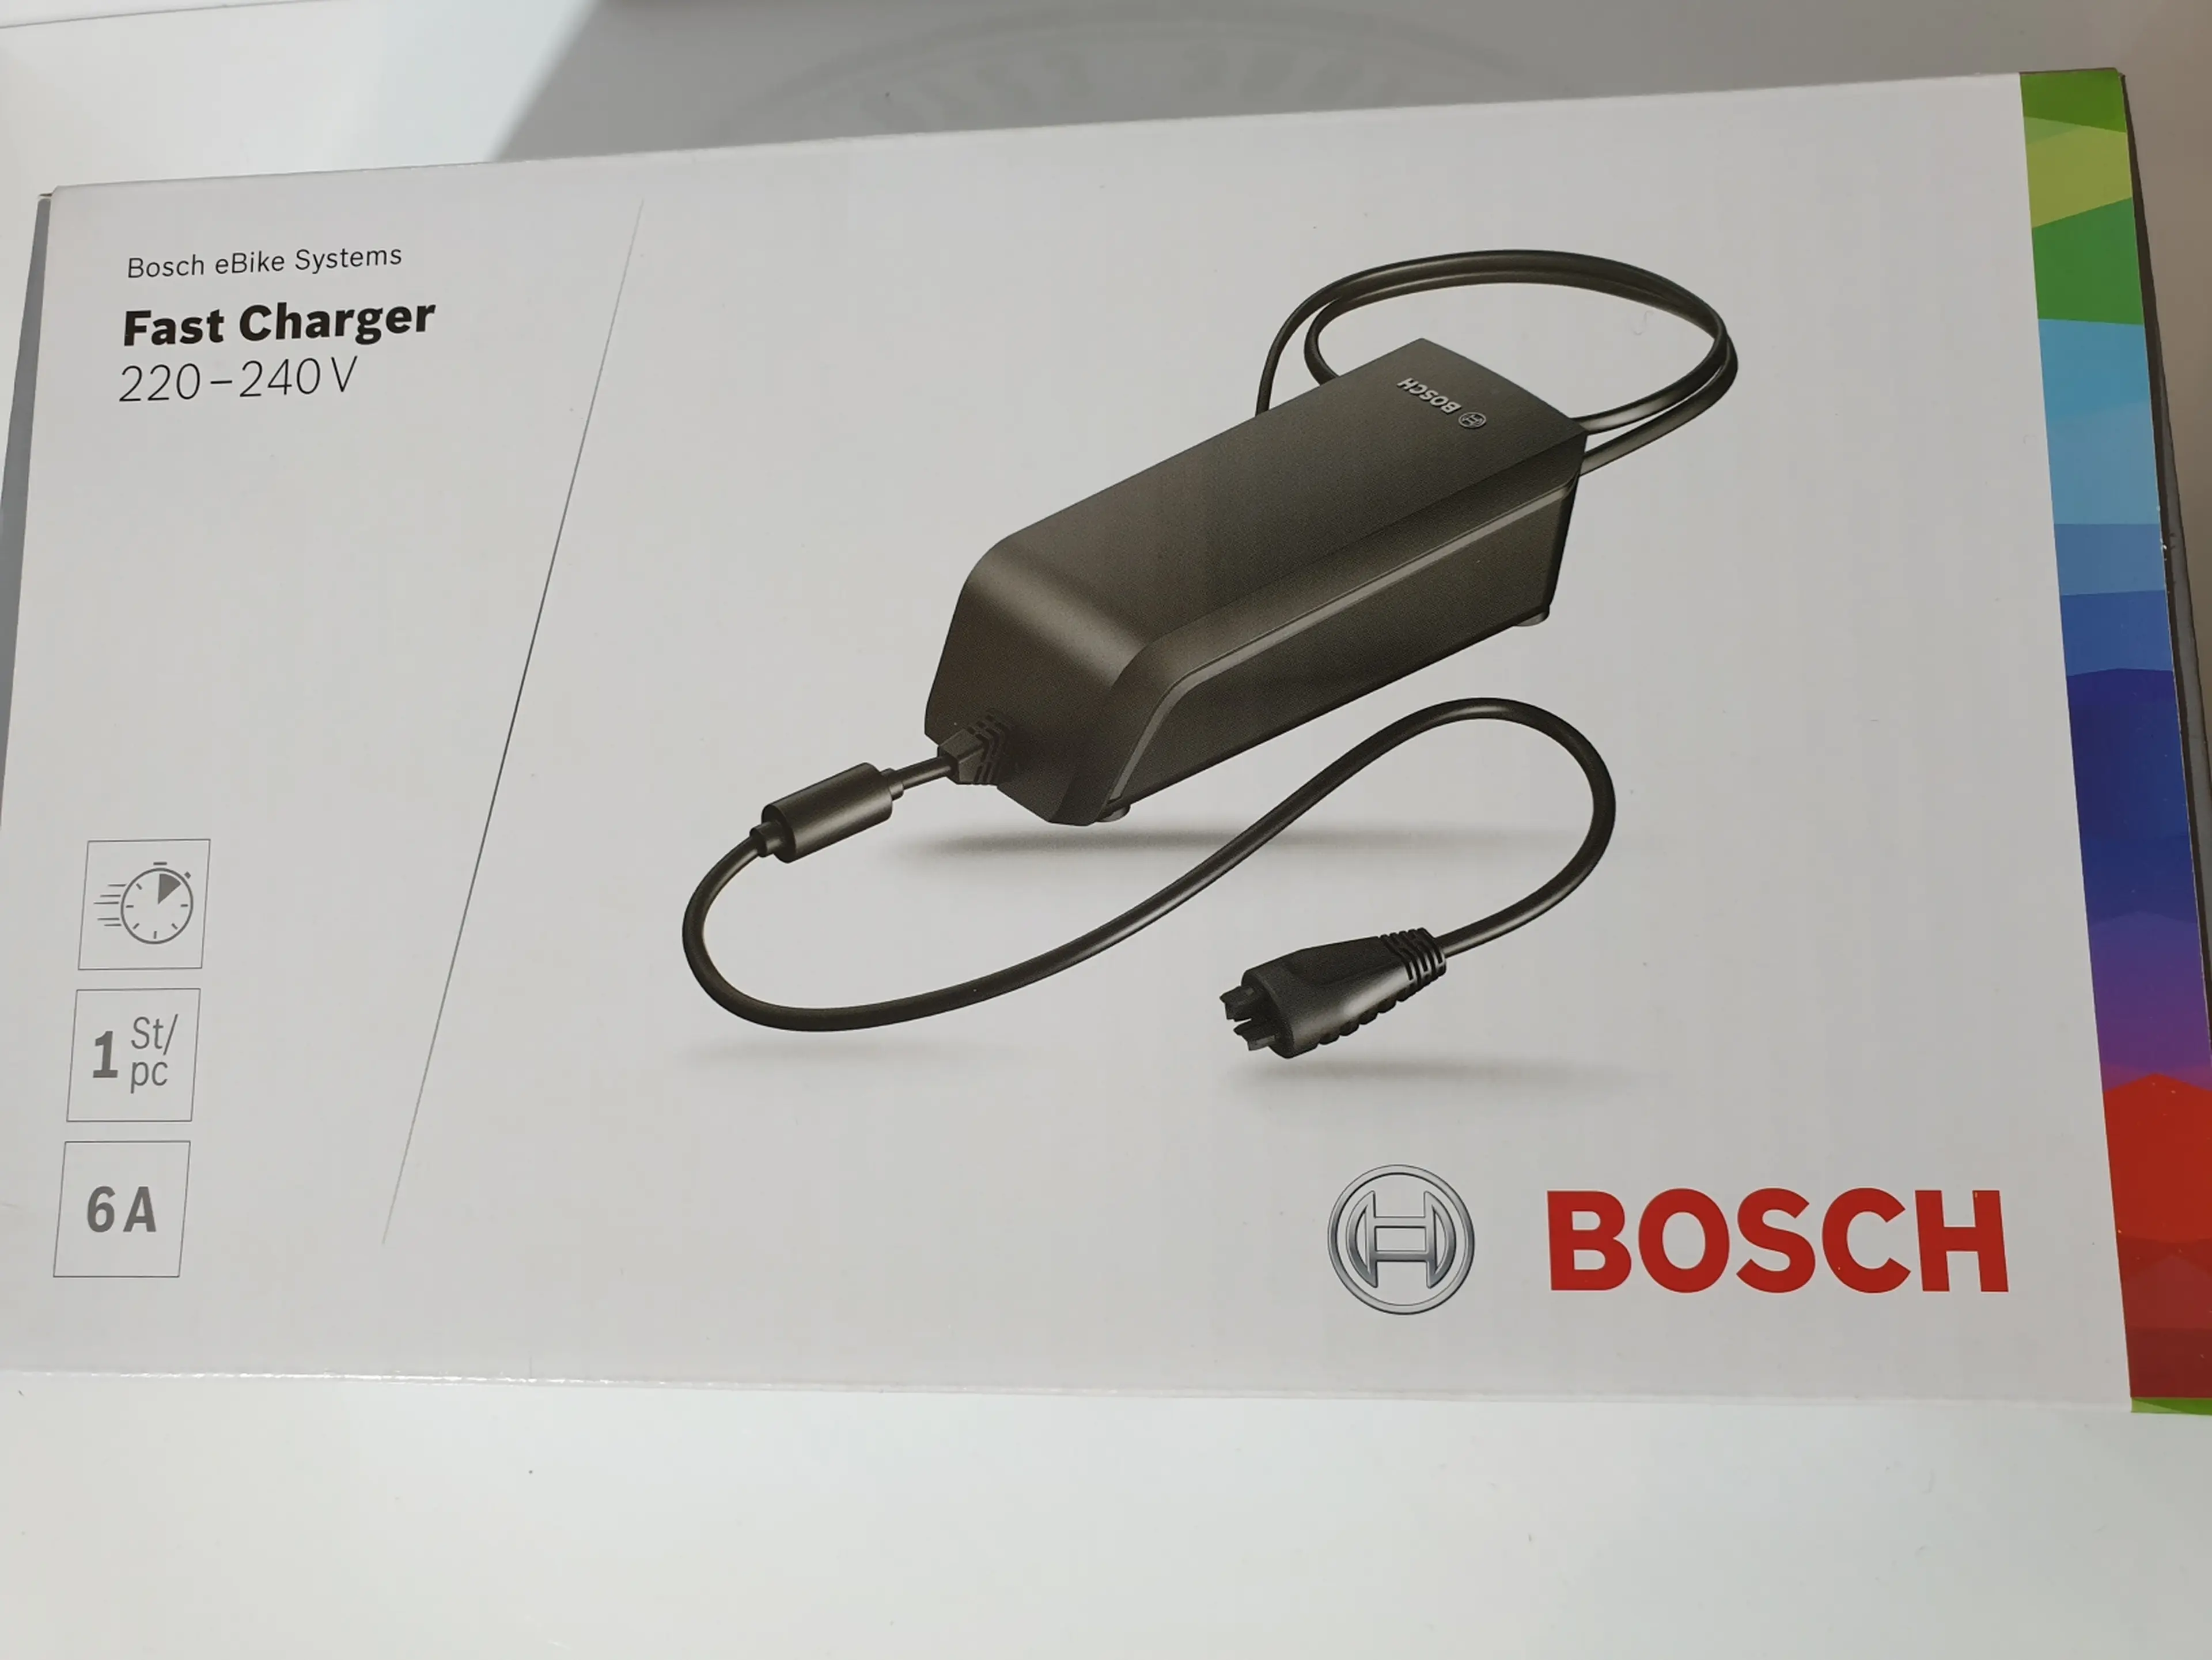 1. Incarcator Bosch 6A Fast charger alimentator bicicleta electrica